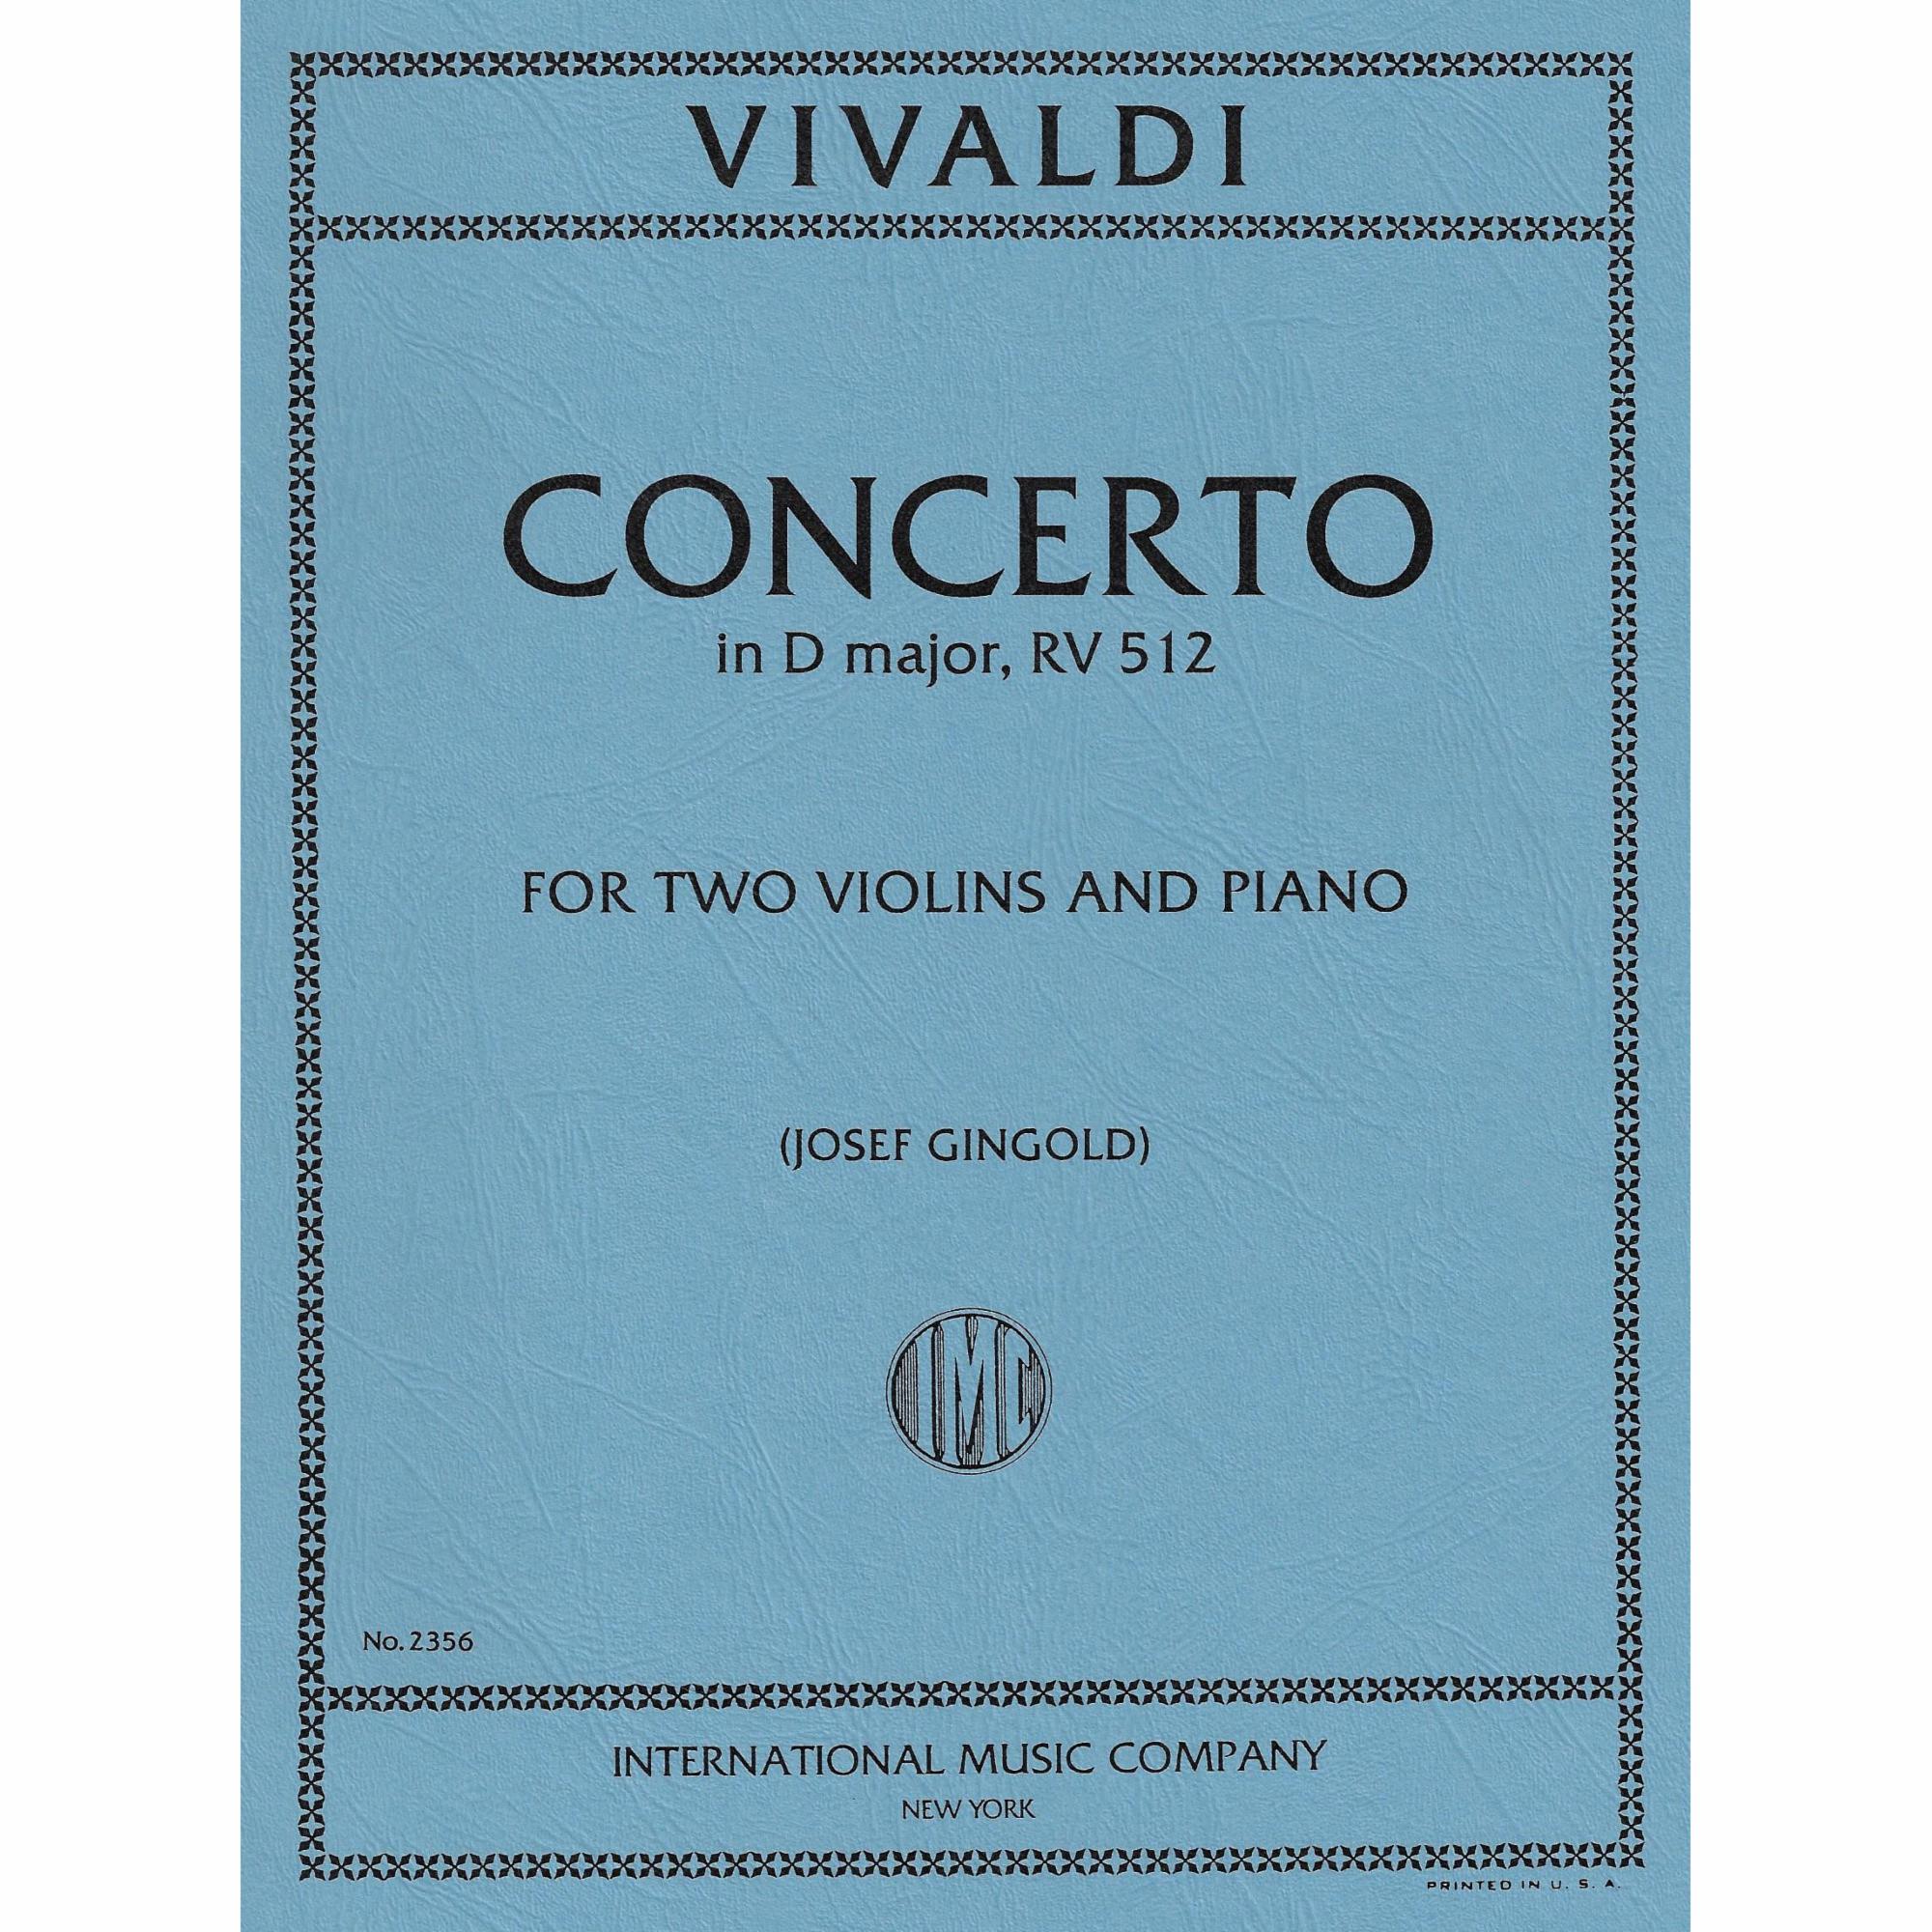 Vivaldi -- Concerto in D Major, RV 512 for Two Violins and Piano